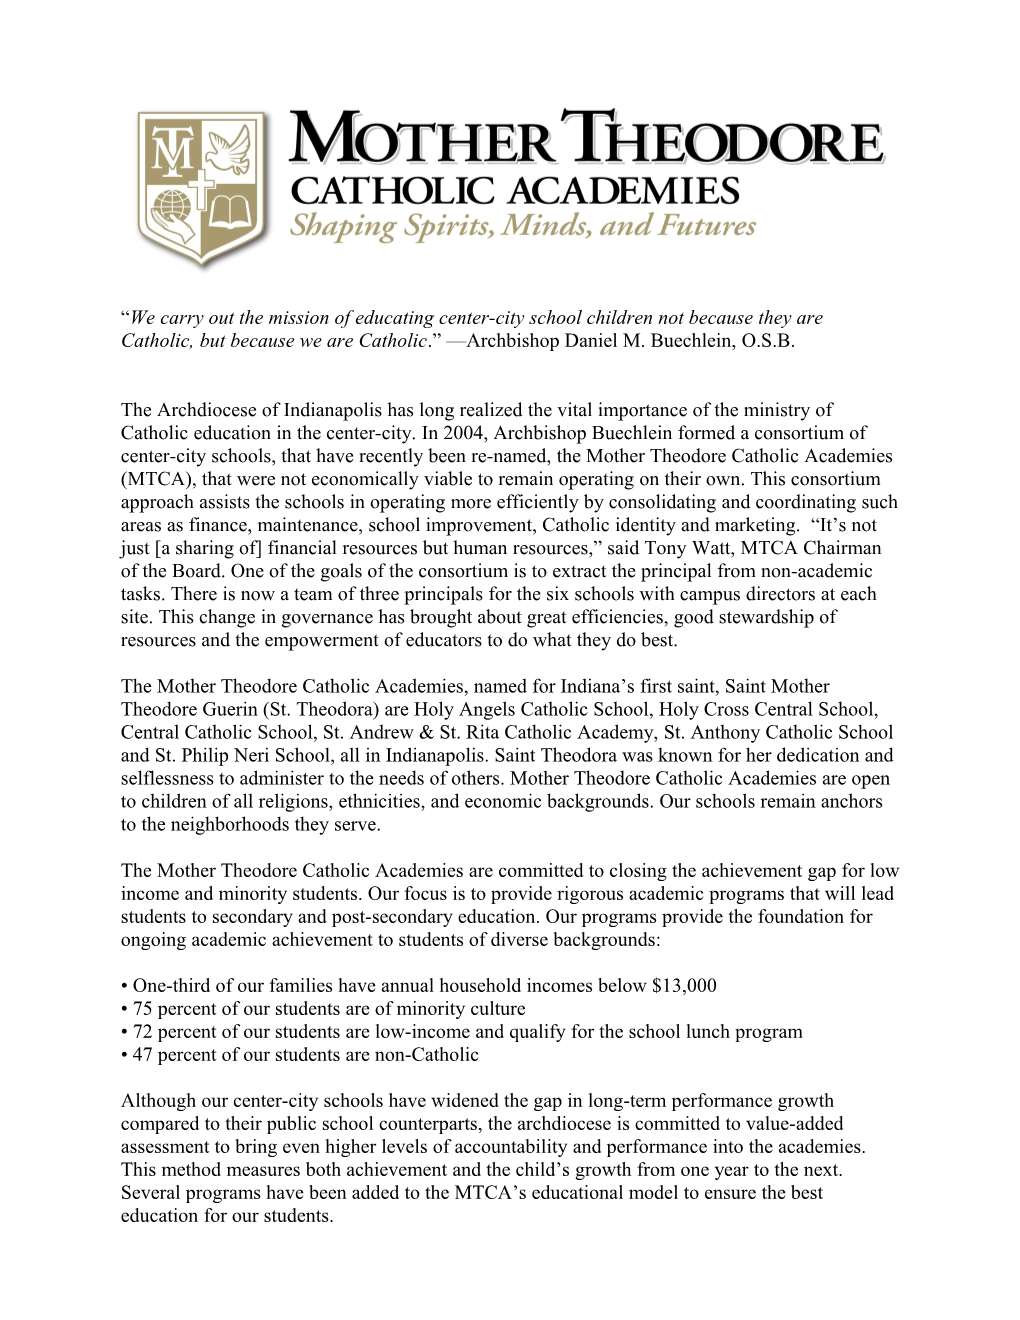 Mother Theodore Catholic Academies Serve Center City